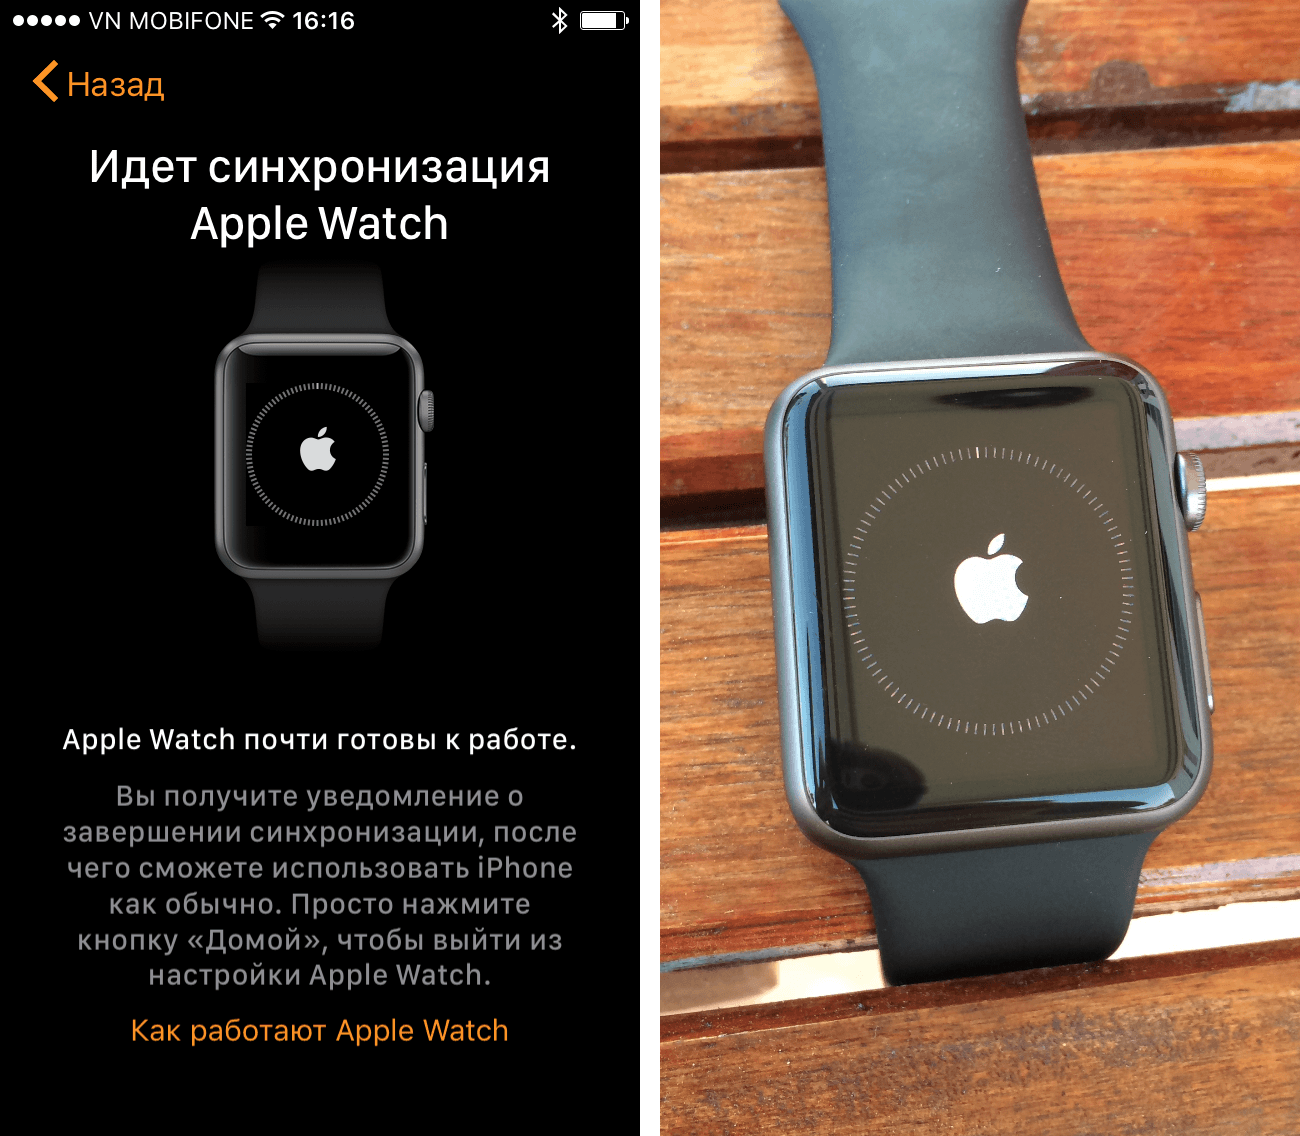 09-apple-watch-setup-macosworld-ru.png